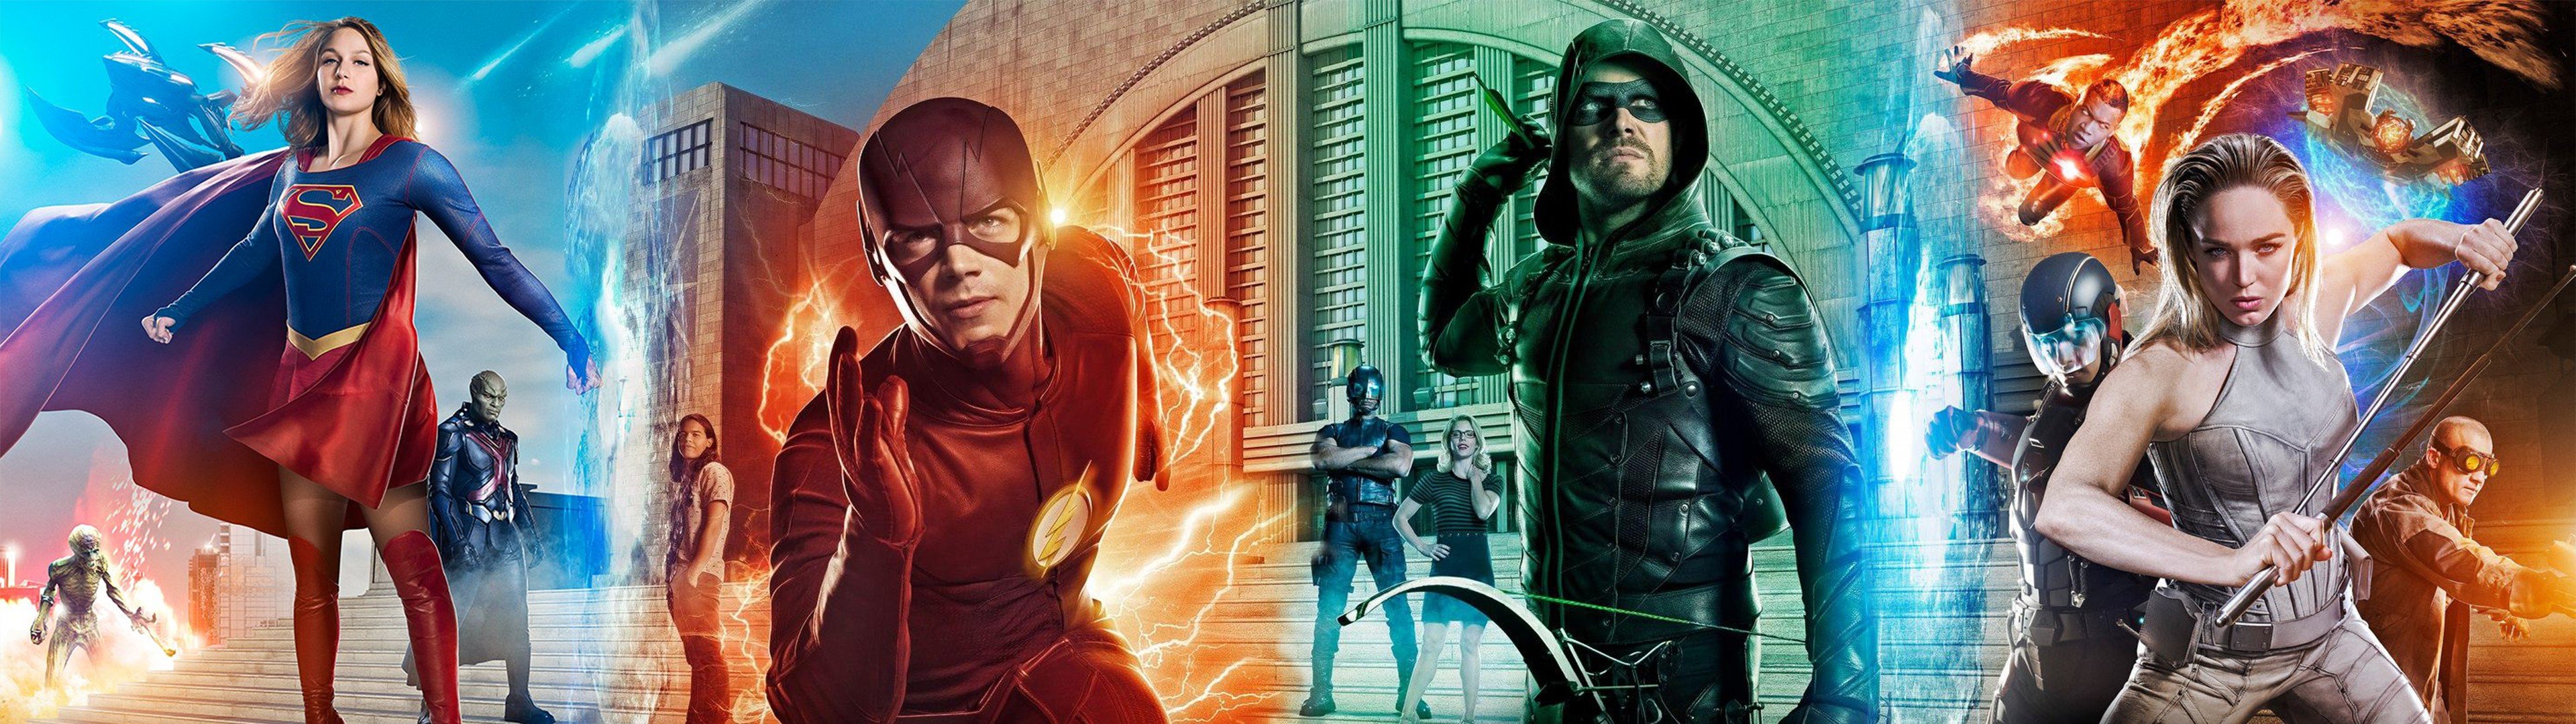 DC Universe, Flash, Supergirl, Legendsoftomorrow, Arrow (TV series) Wallpaper